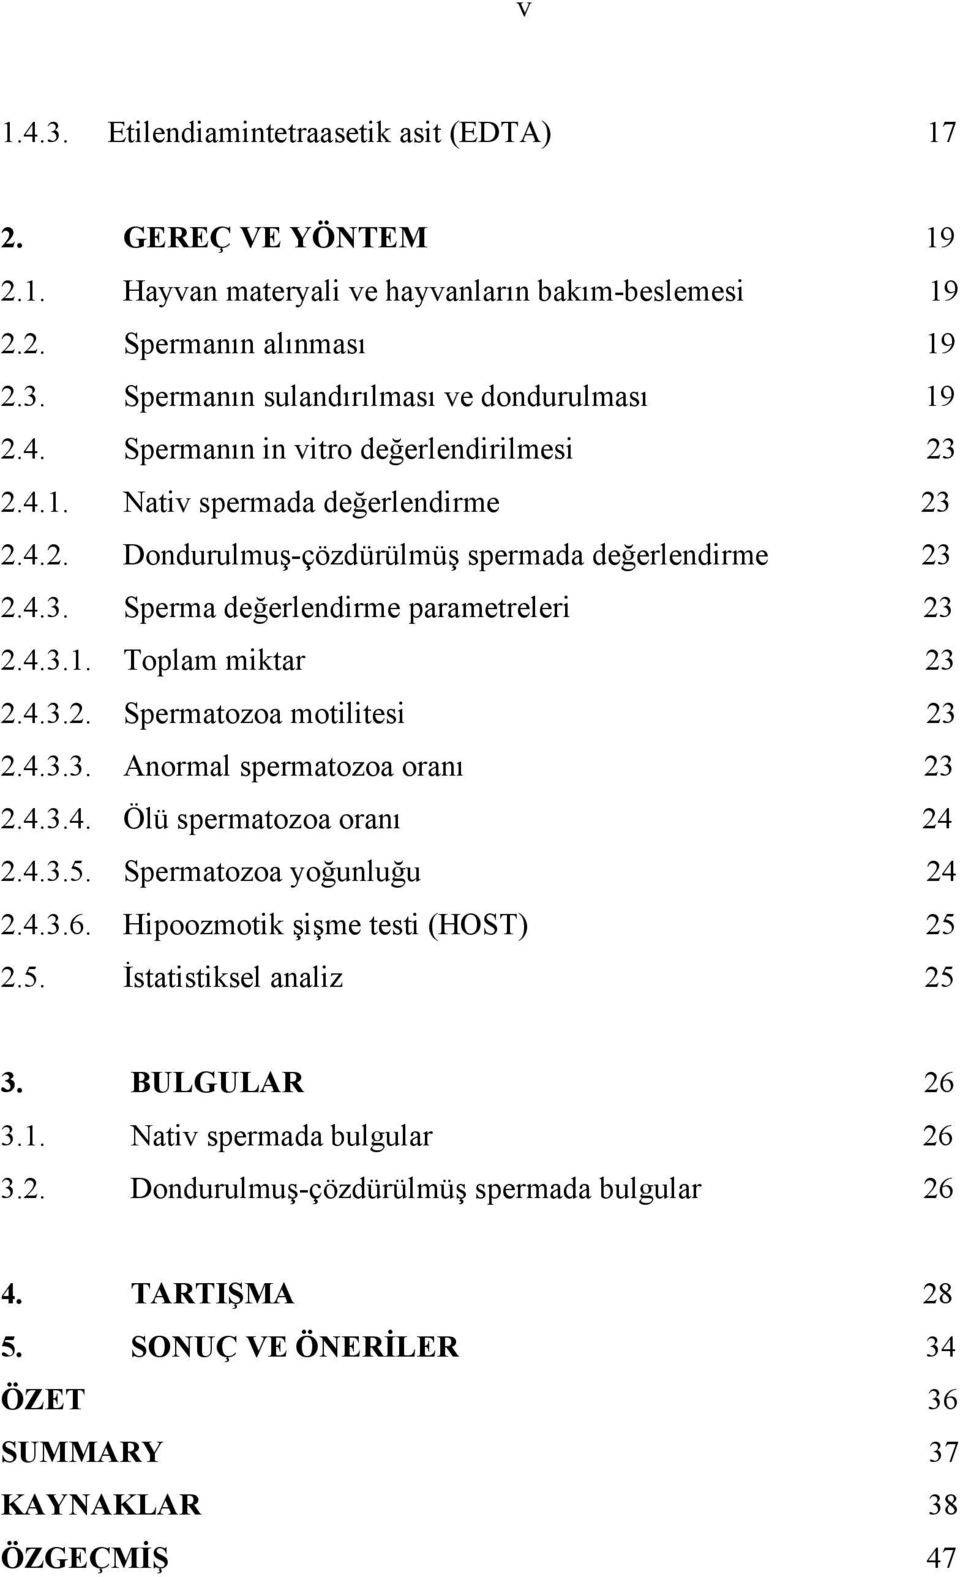 4.3.2. Spermatozoa motilitesi 23 2.4.3.3. Anormal spermatozoa oranı 23 2.4.3.4. Ölü spermatozoa oranı 24 2.4.3.5. Spermatozoa yoğunluğu 24 2.4.3.6. Hipoozmotik şişme testi (HOST) 25 2.5. İstatistiksel analiz 25 3.